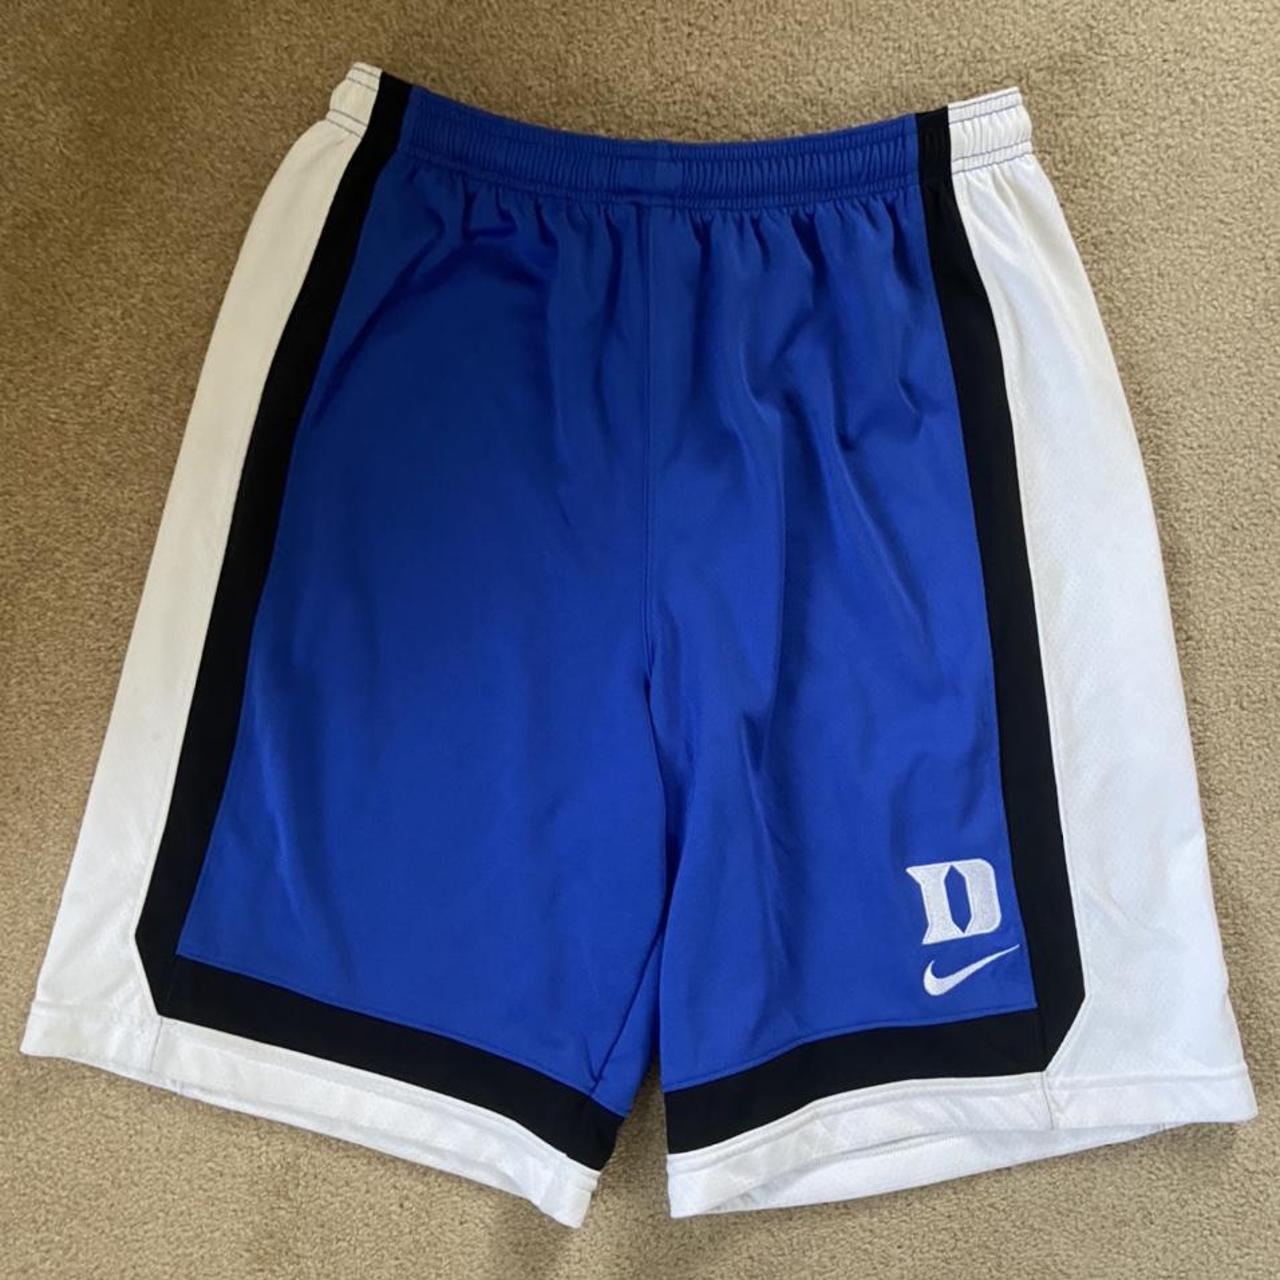 Product Image 1 - Super cool duke basketball shorts!